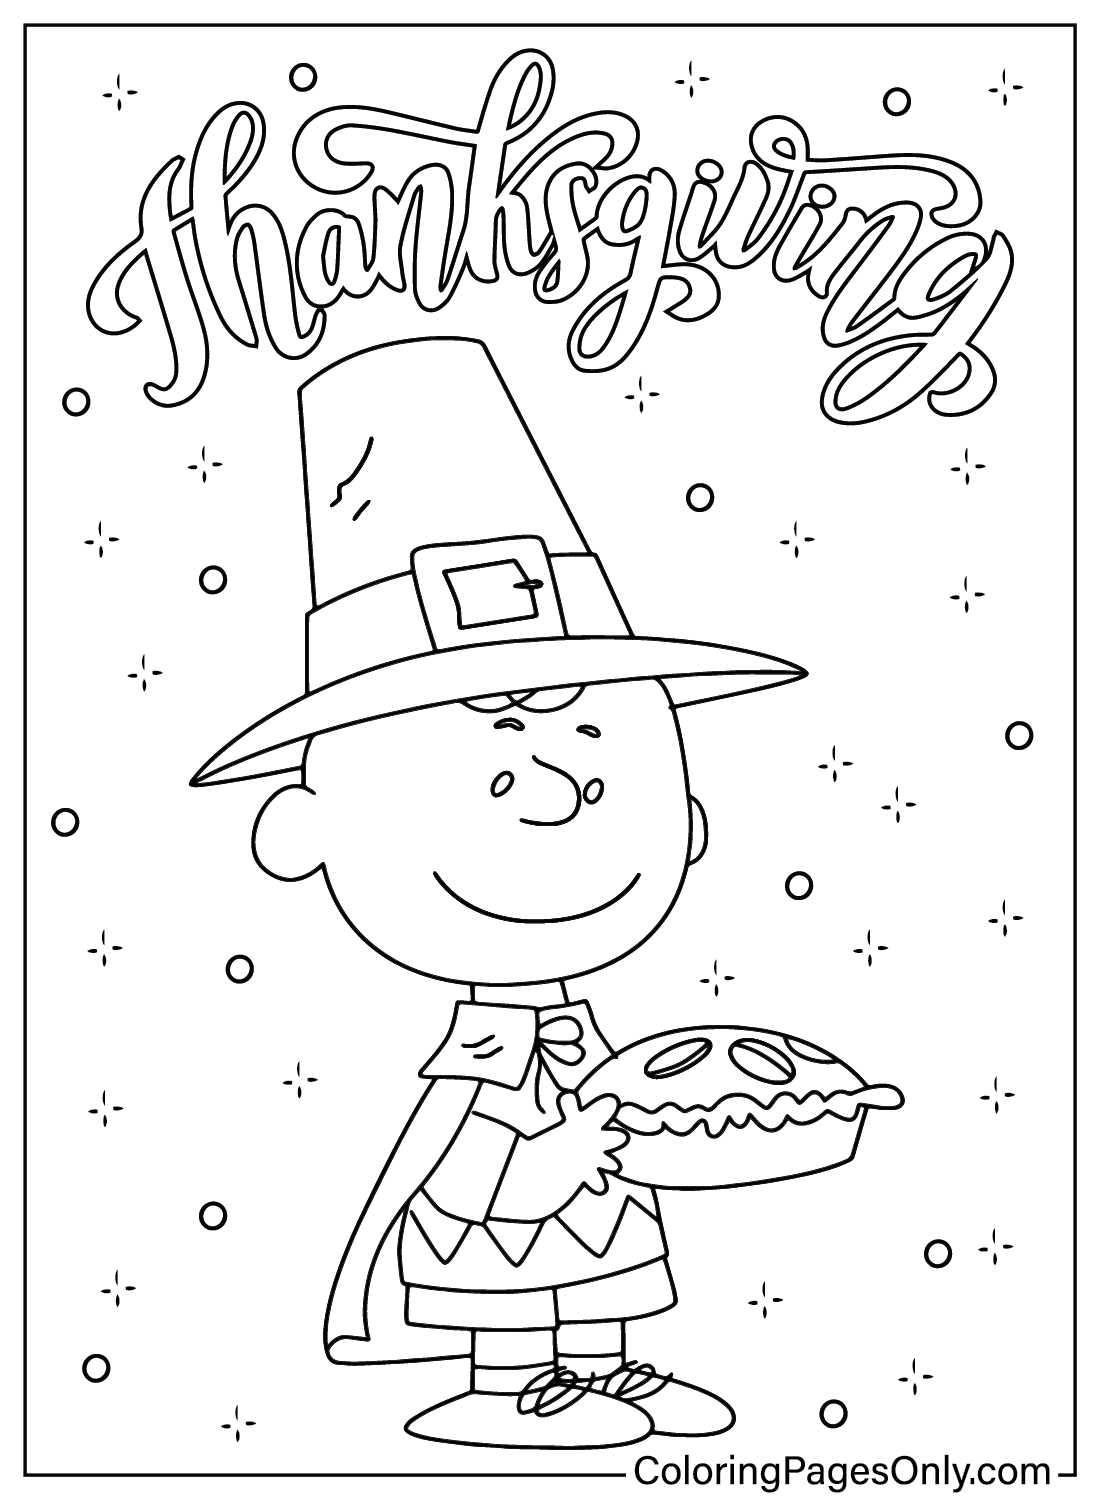 Thanksgiving Charlie Brown kleurplaat uit Thanksgiving cartoon